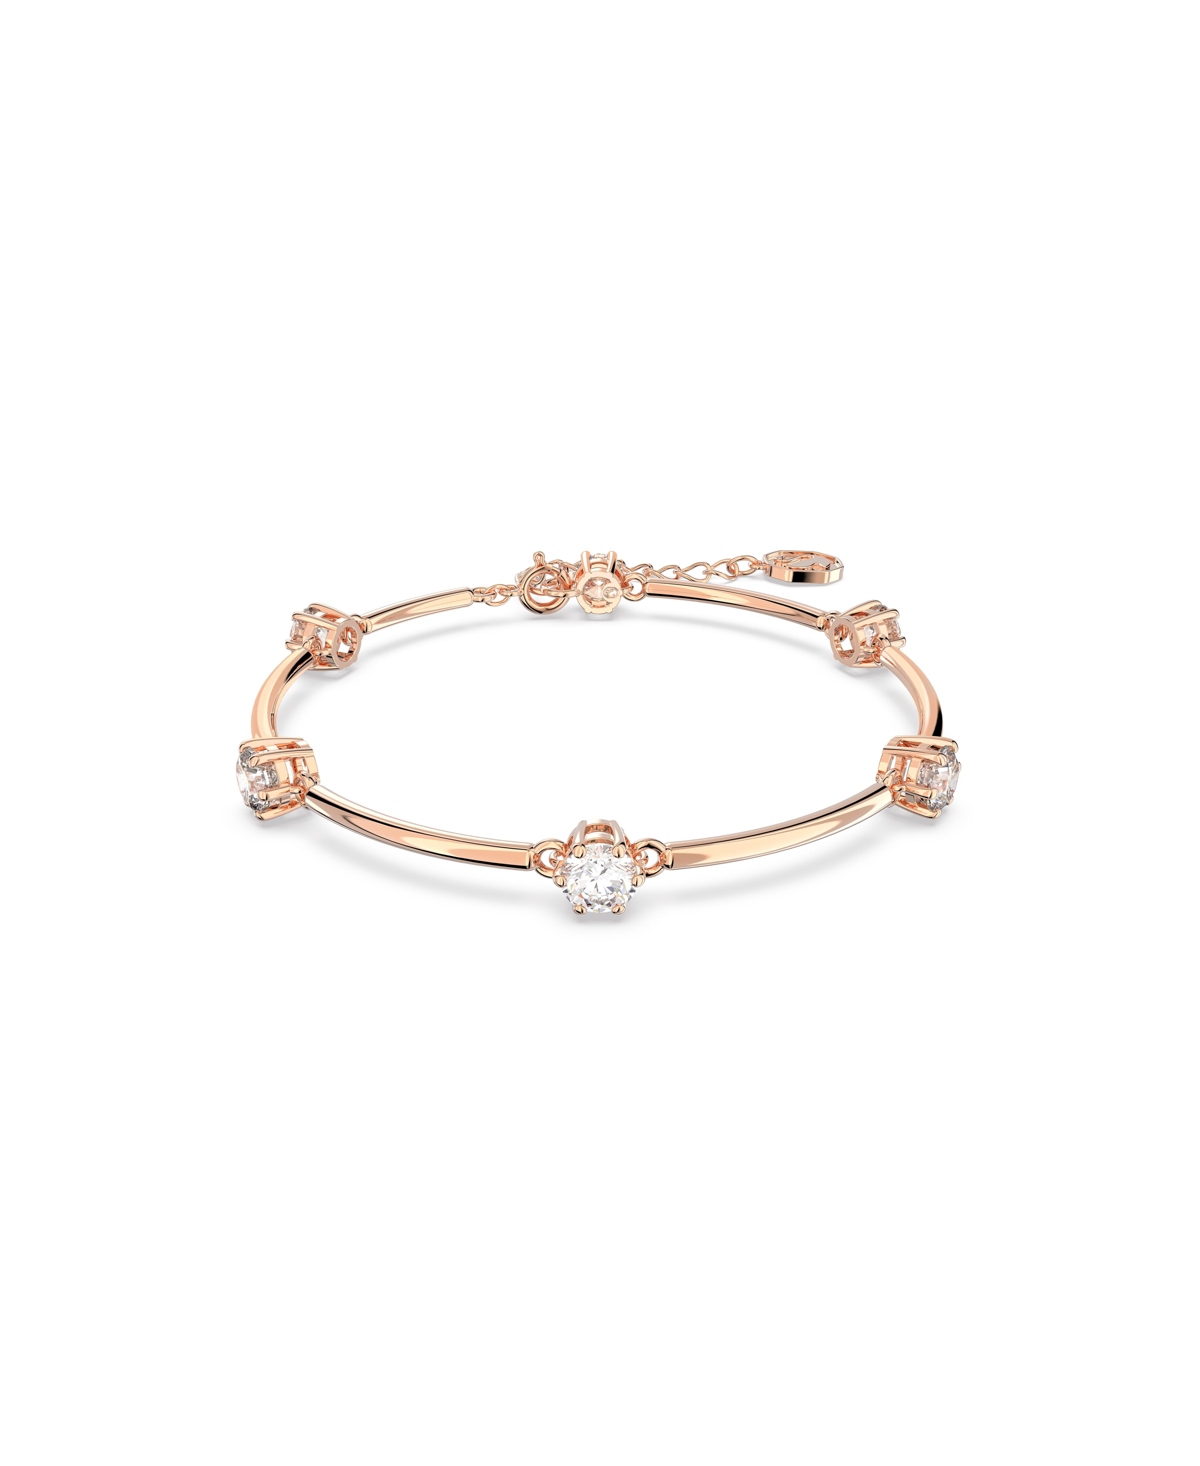 Swarovski Crystal Constella Bracelet Round Cut White Rose Gold-tone Plated In Pink